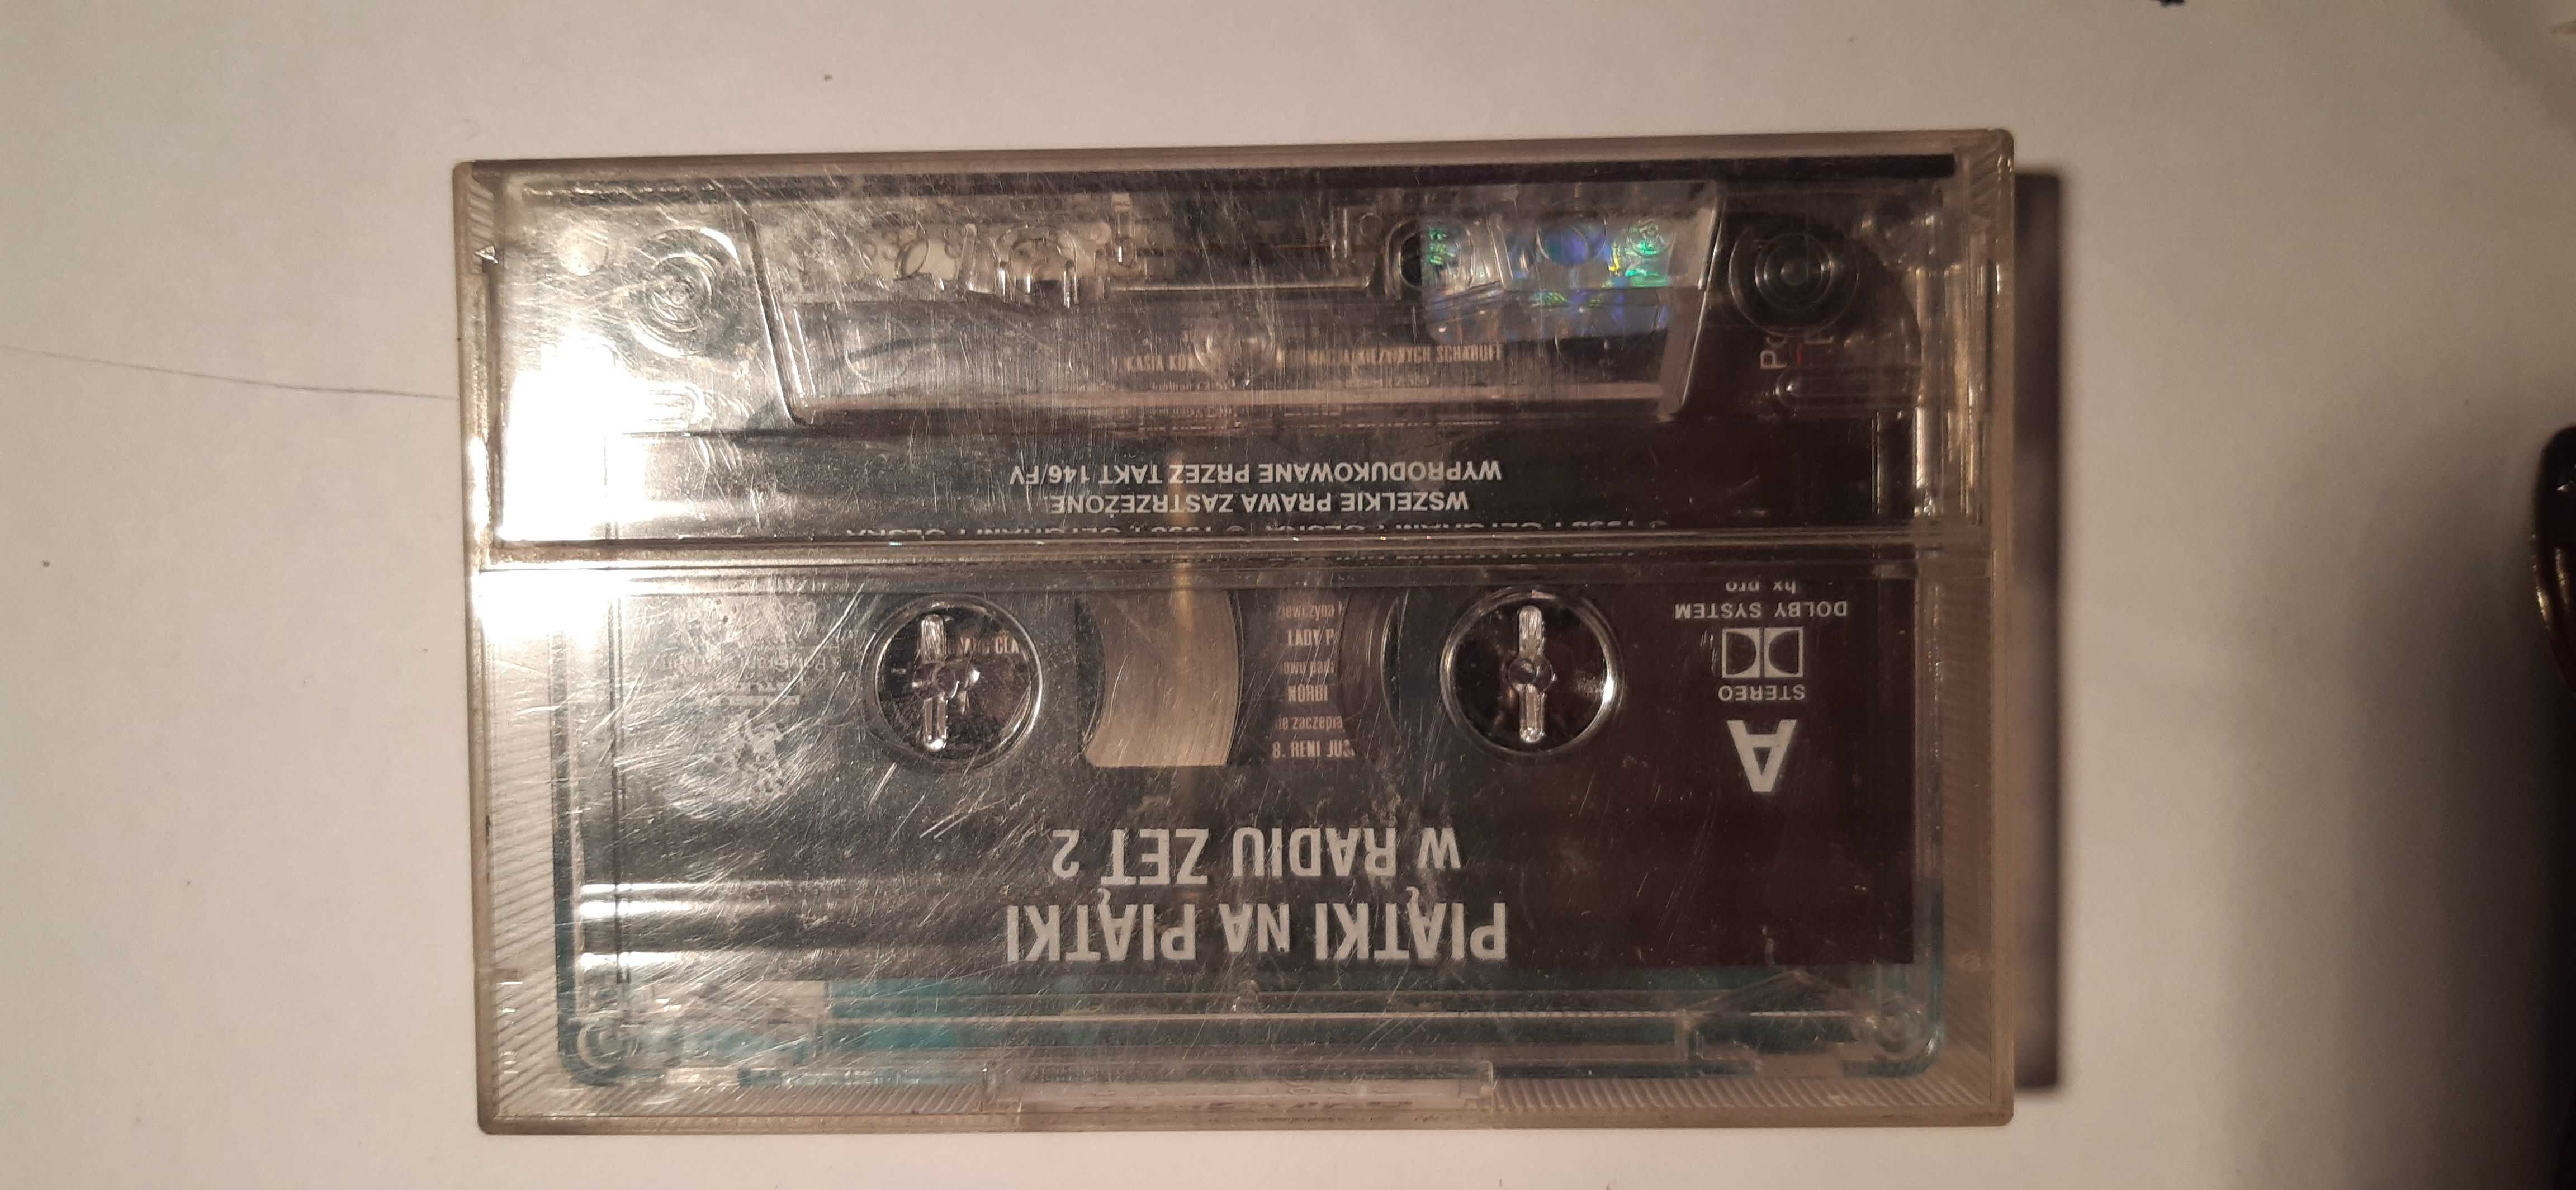 kaseta magnetofonowa piątki na piątki w radiu zet